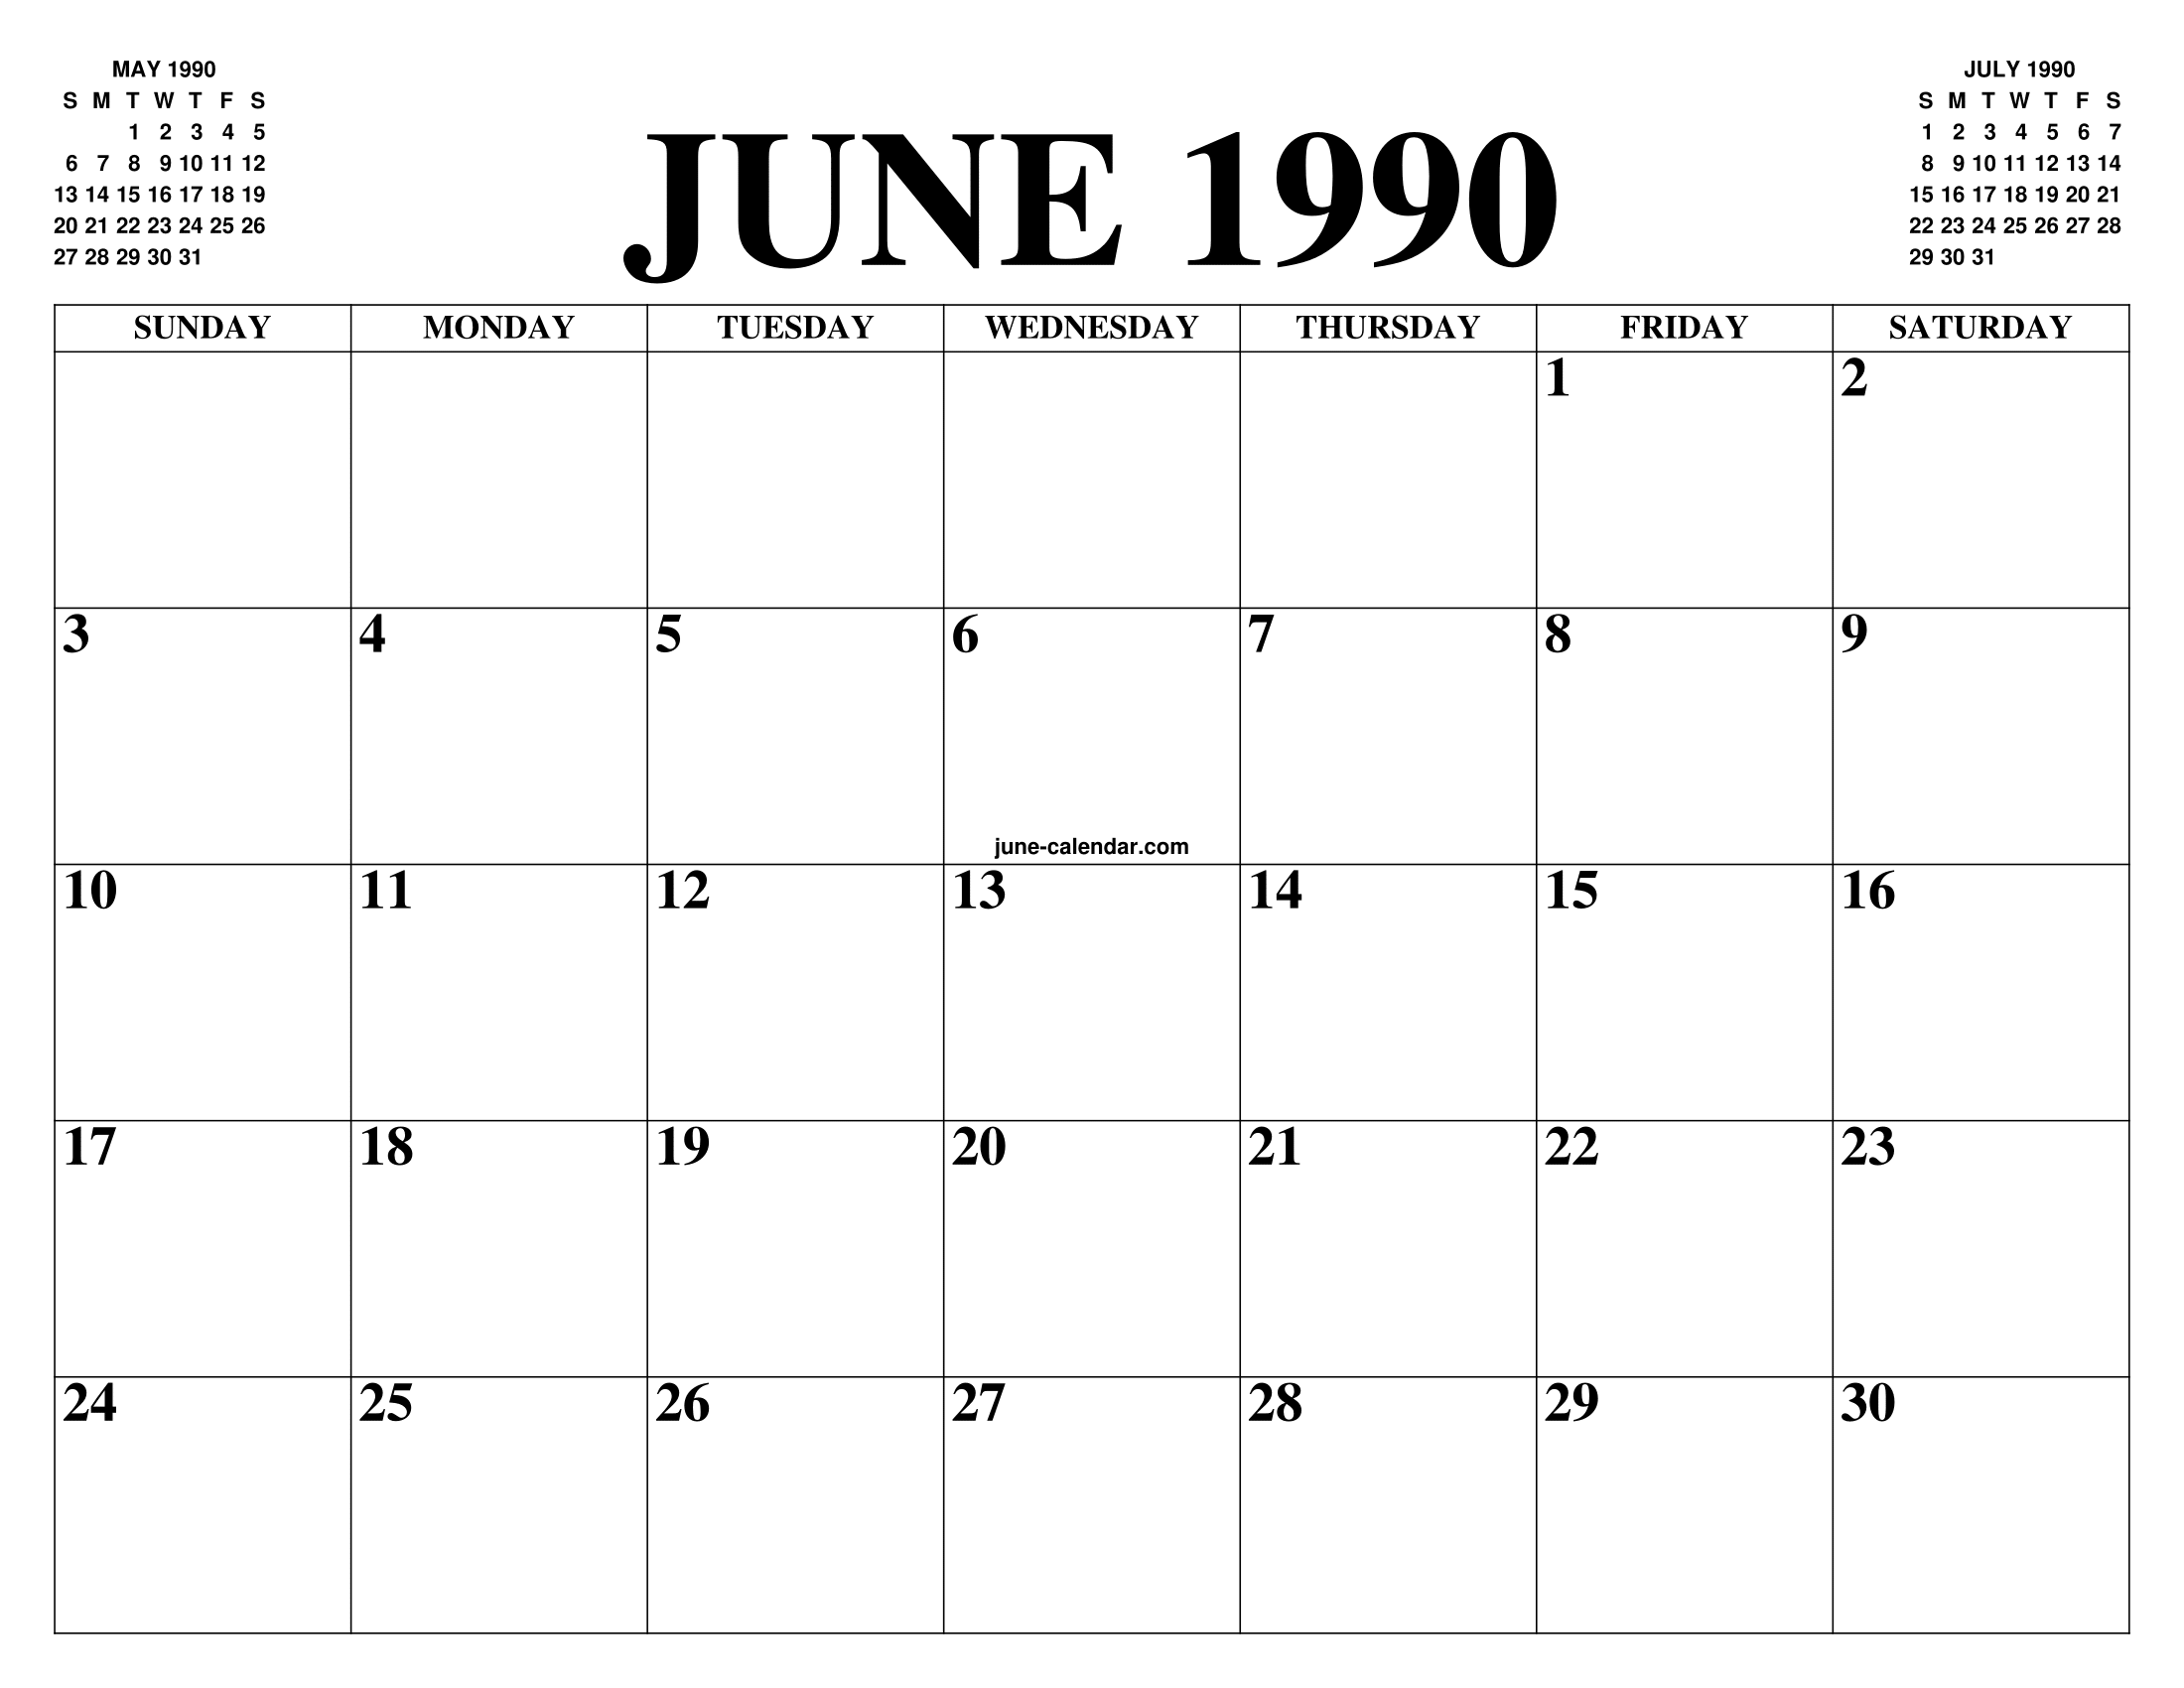 JUNE 1990 CALENDAR OF THE MONTH: FREE PRINTABLE JUNE CALENDAR OF THE